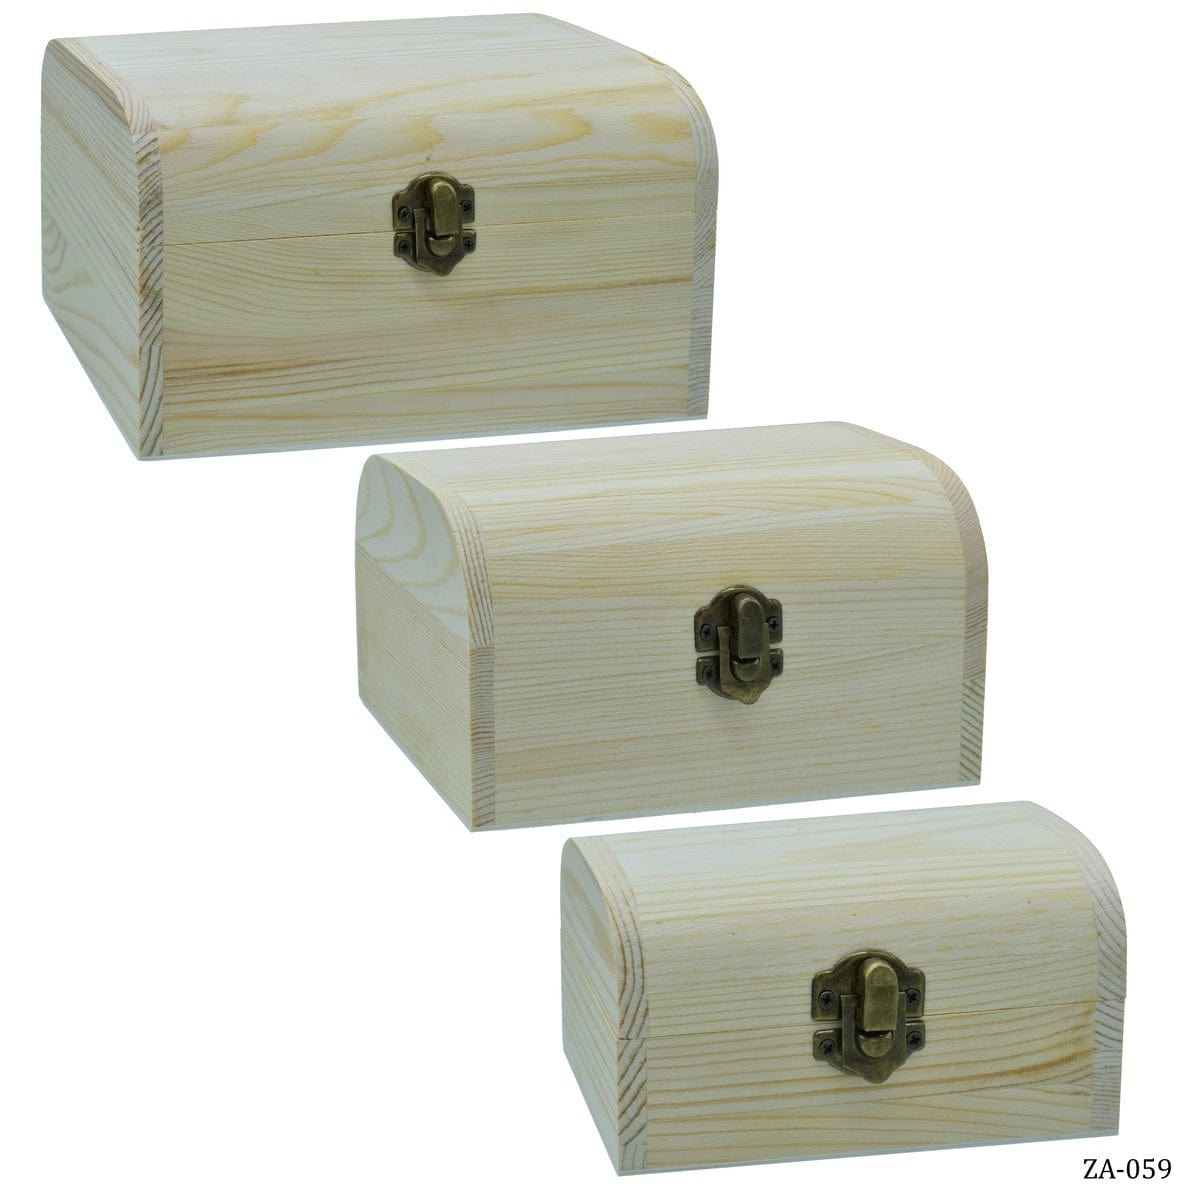 jags-mumbai Wooden box Wooden Empty Box Set Of 3 Pcs Top Oval Shape